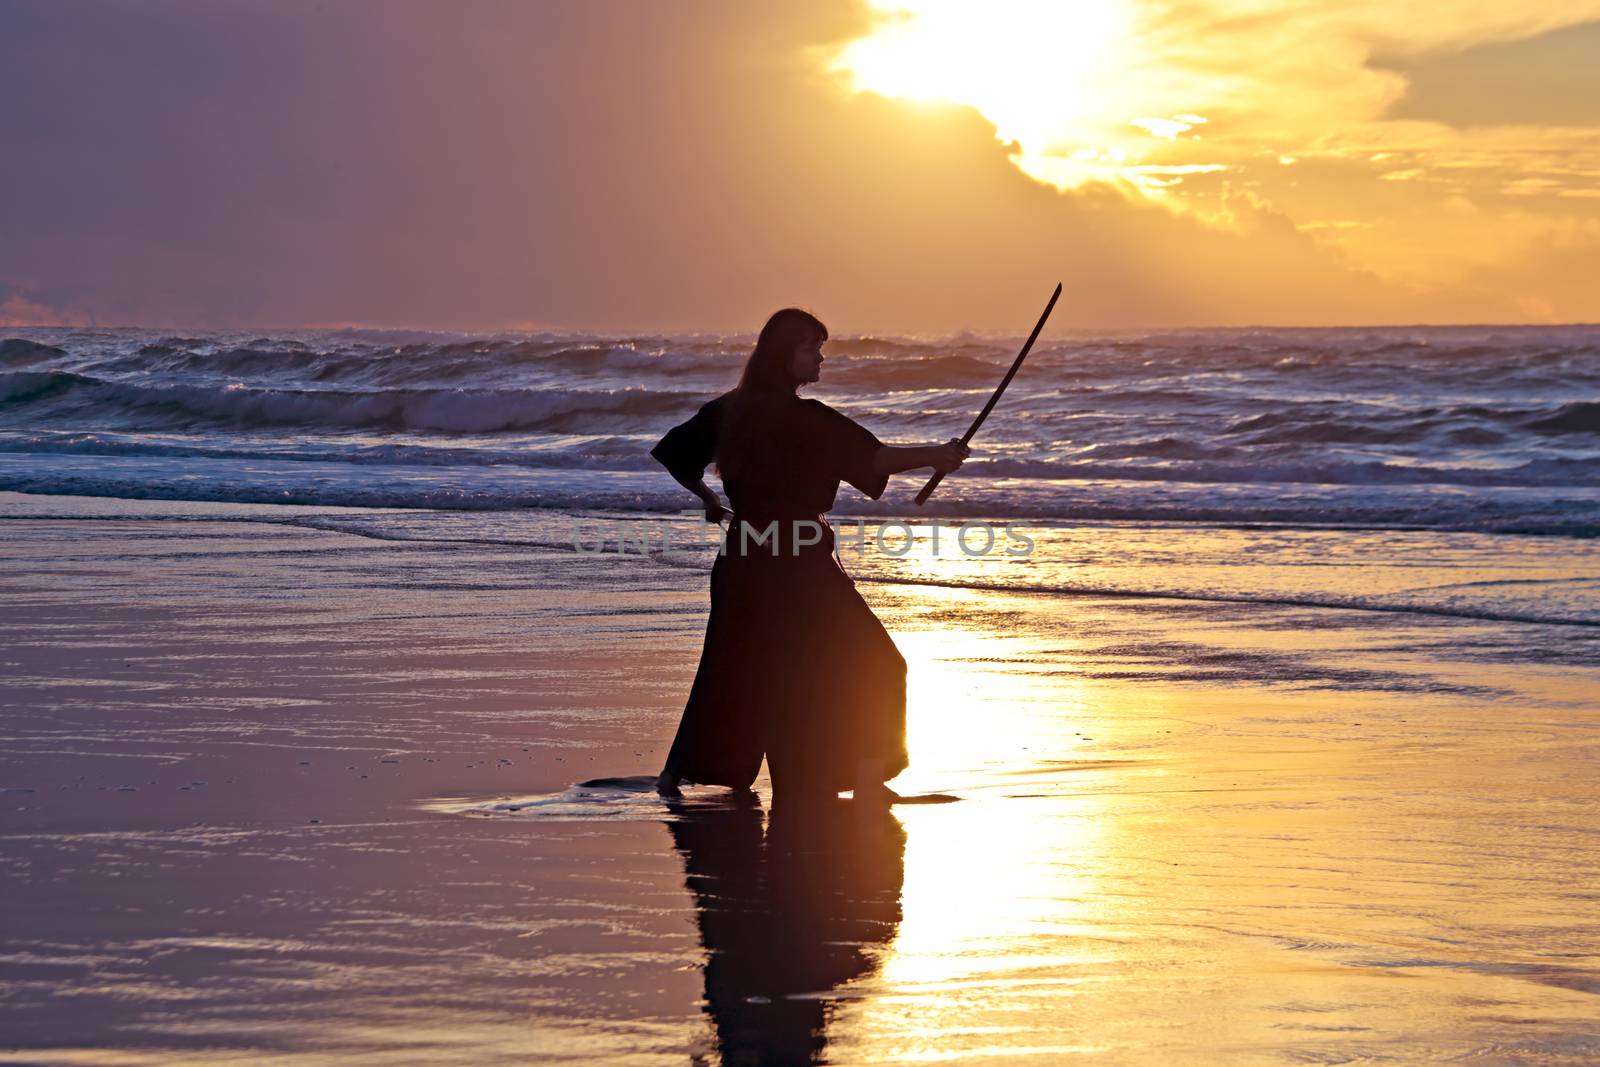 Young samurai women with Japanese sword(Katana) at sunset on the beach